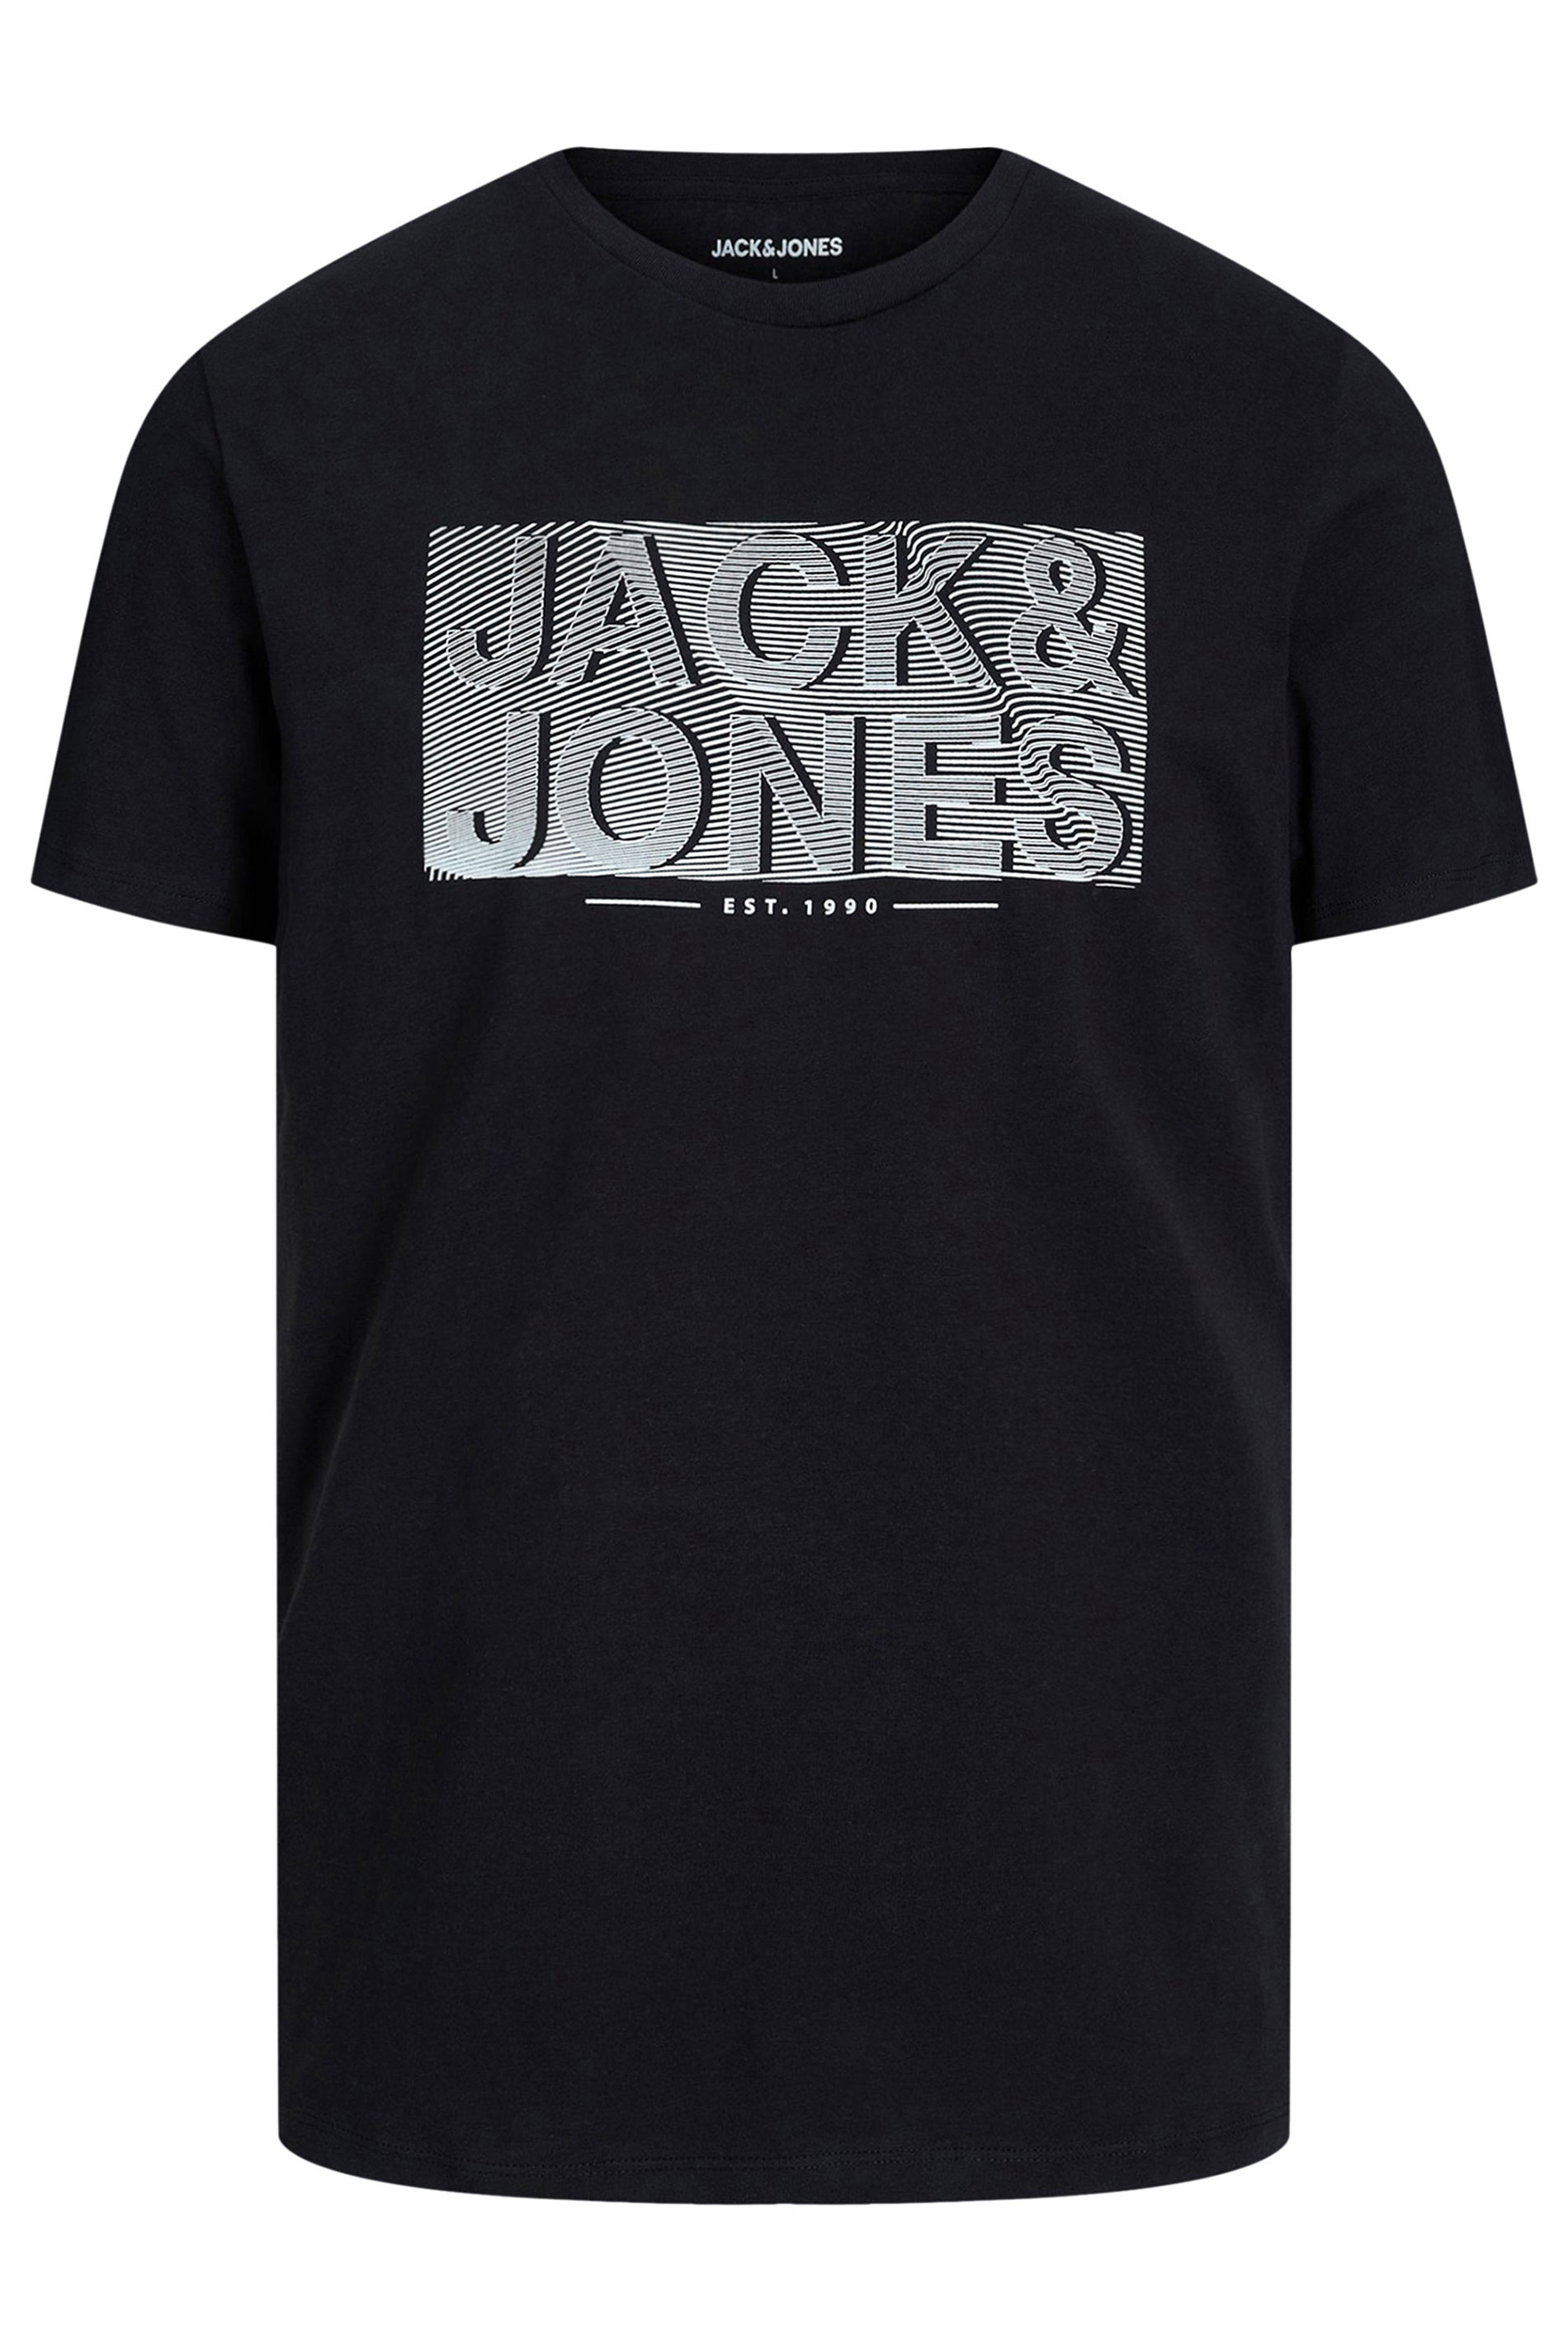 JACK & JONES Big & Tall Black T-Shirt | BadRhino 2